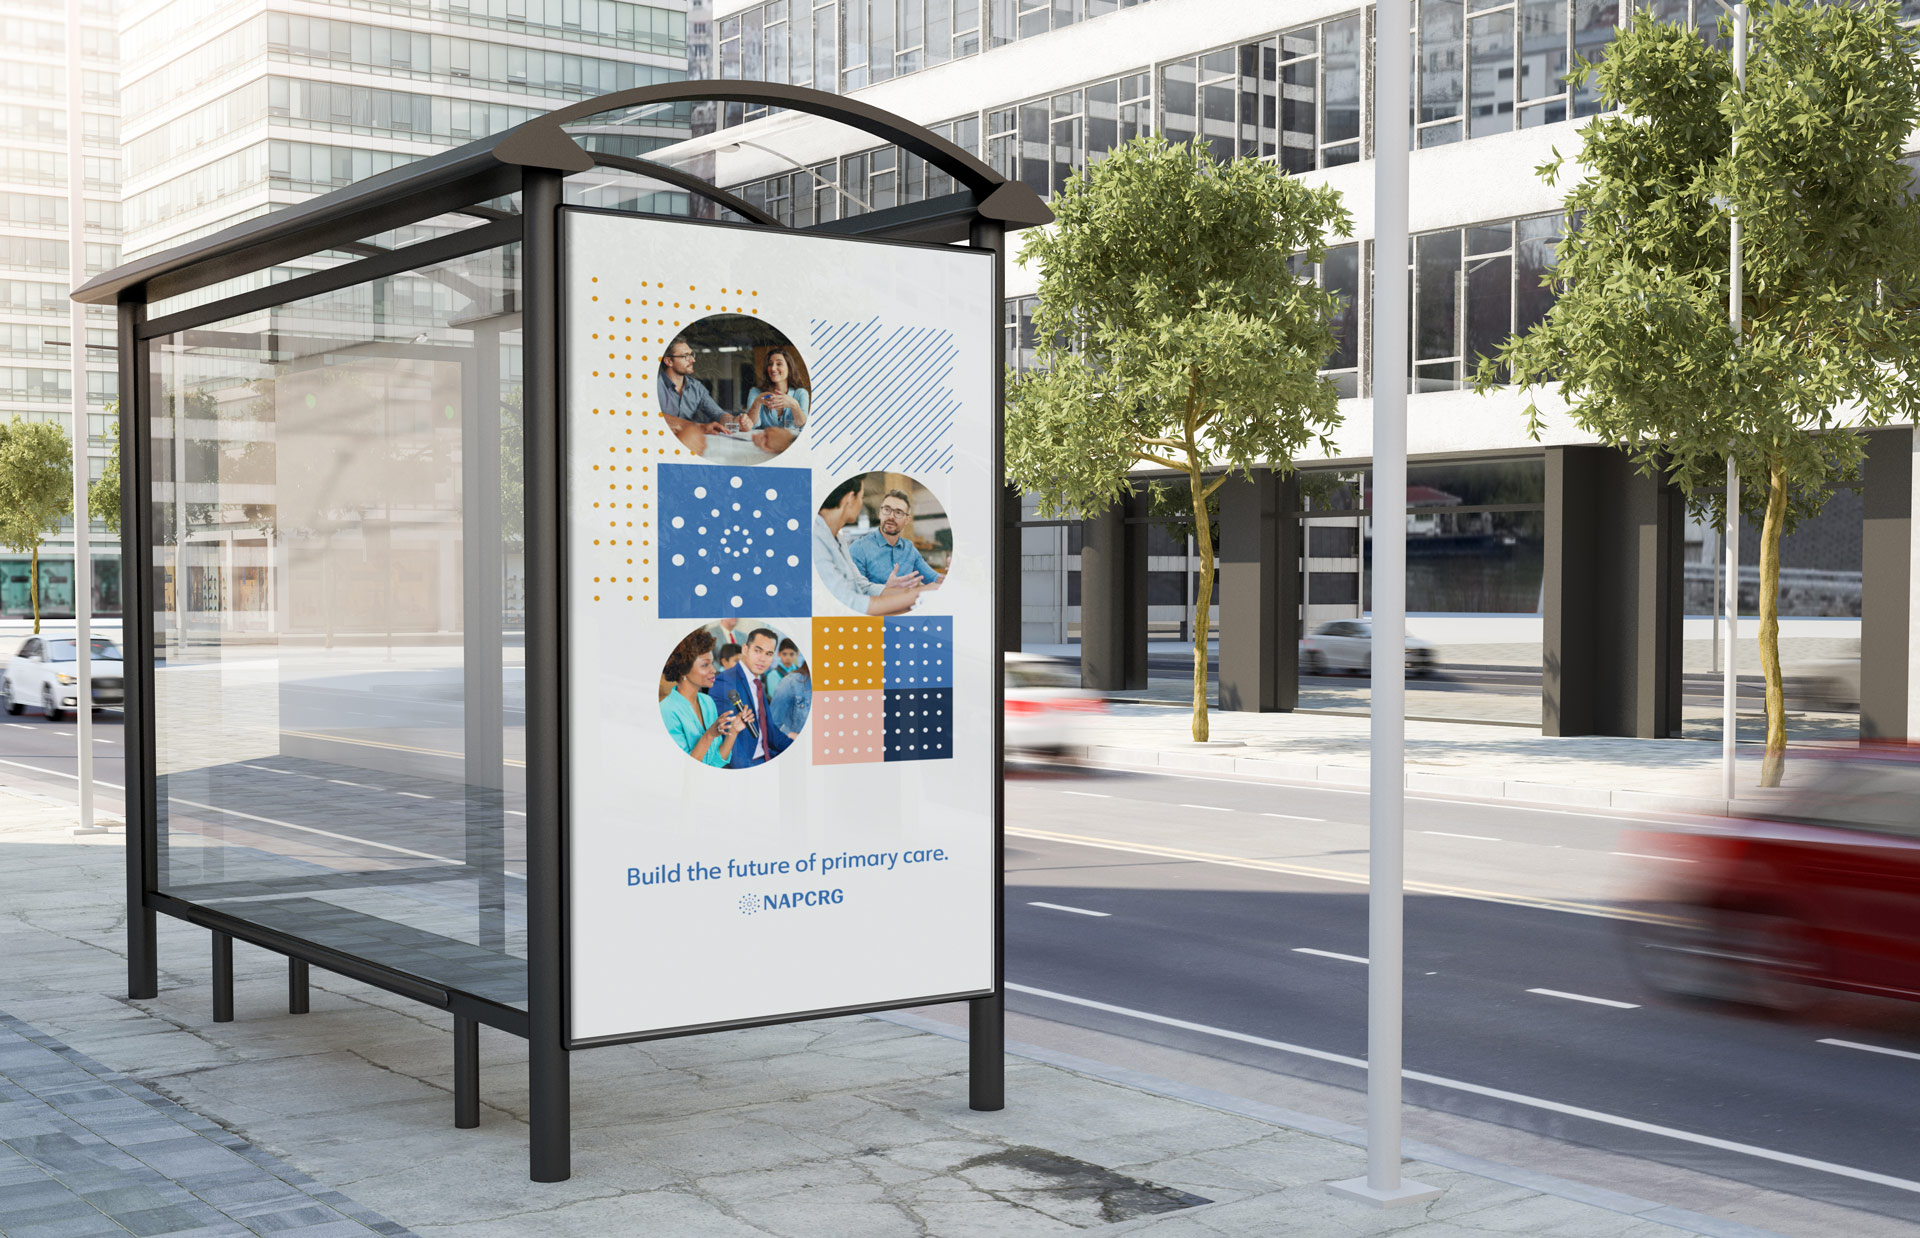 NAPCRG branding design on a bus stop ad